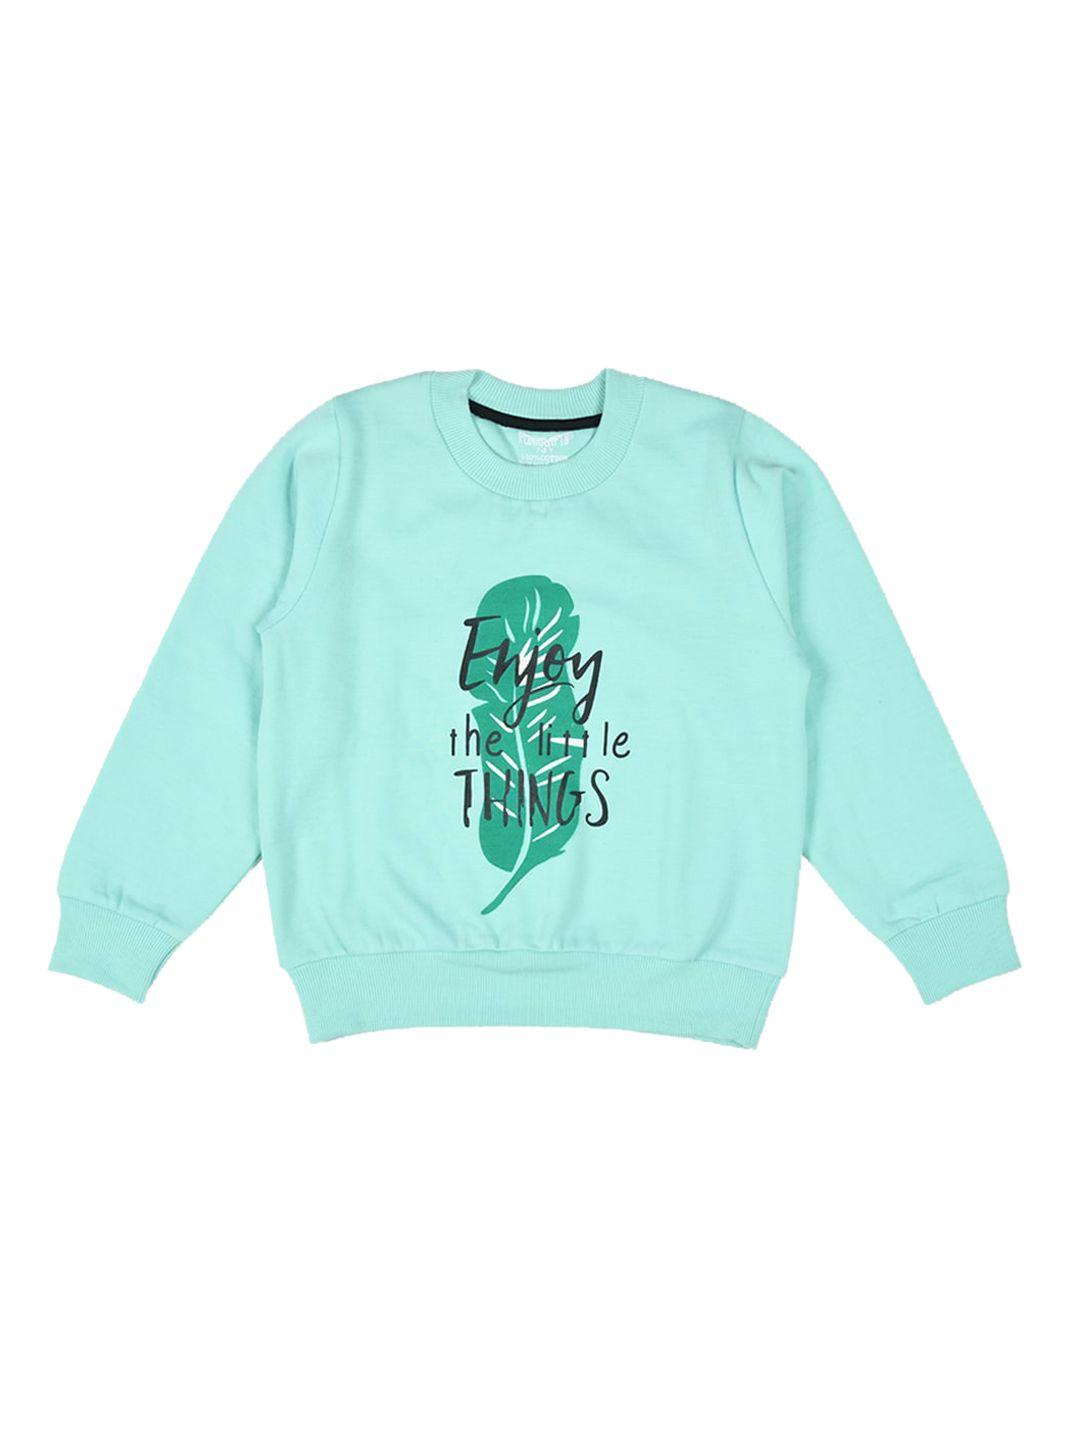 funkrafts-unisex-kids-green-printed-fleece-sweatshirt